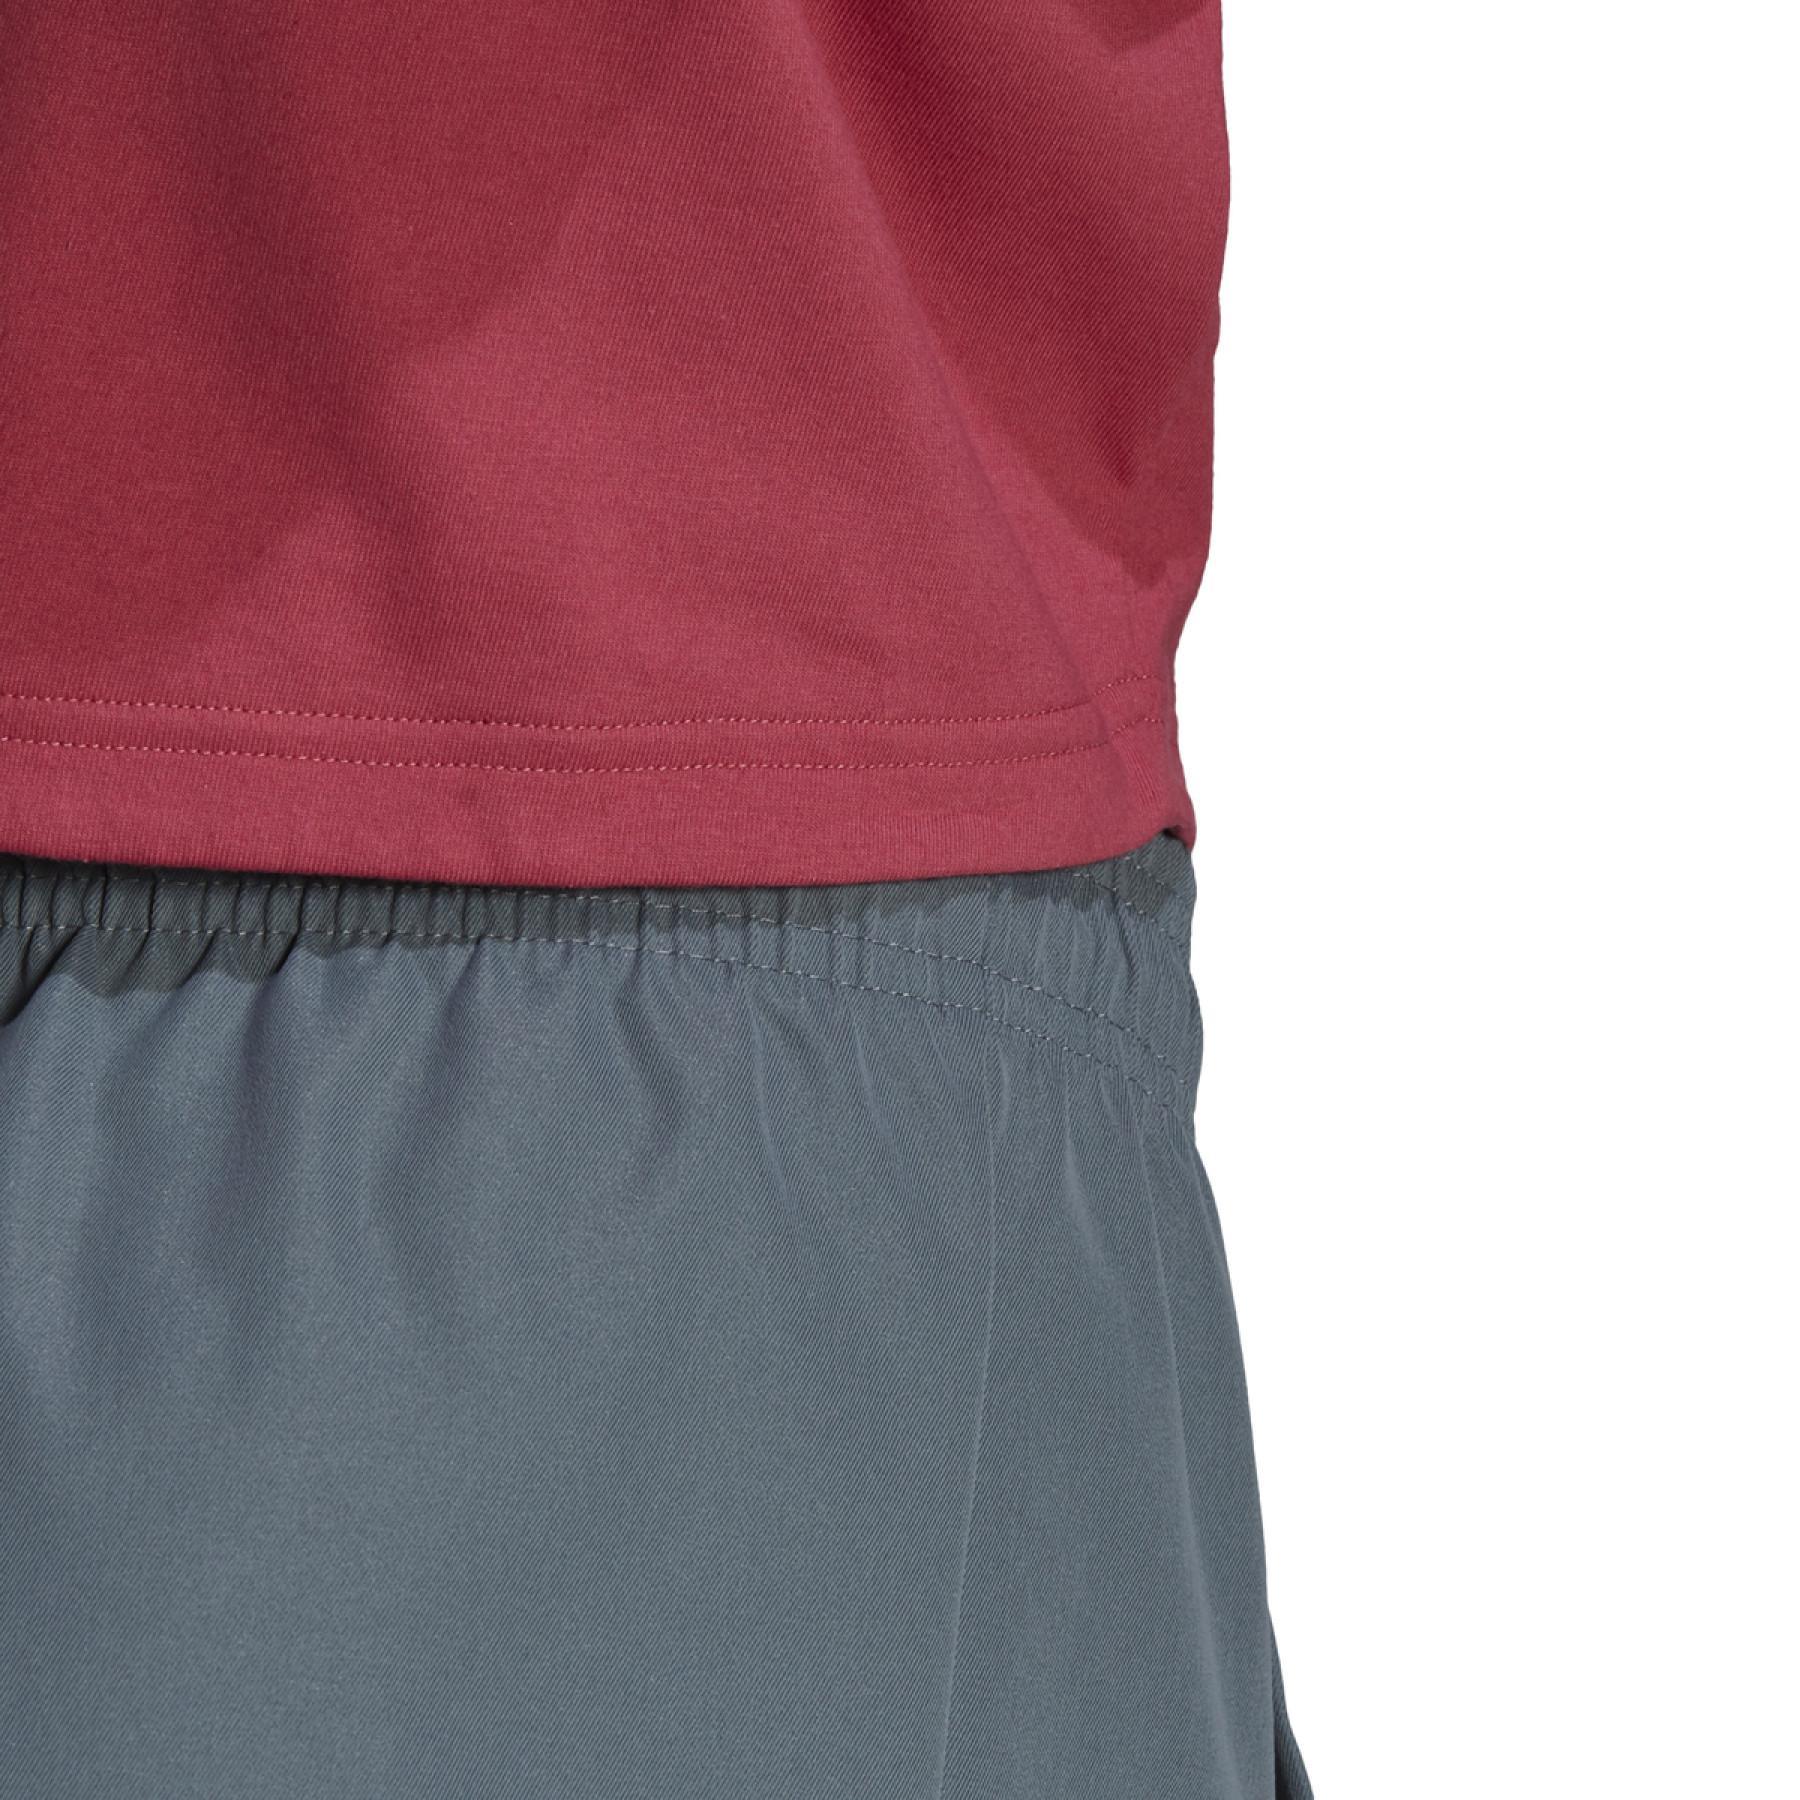 adidasportswearummer pack women's shorts